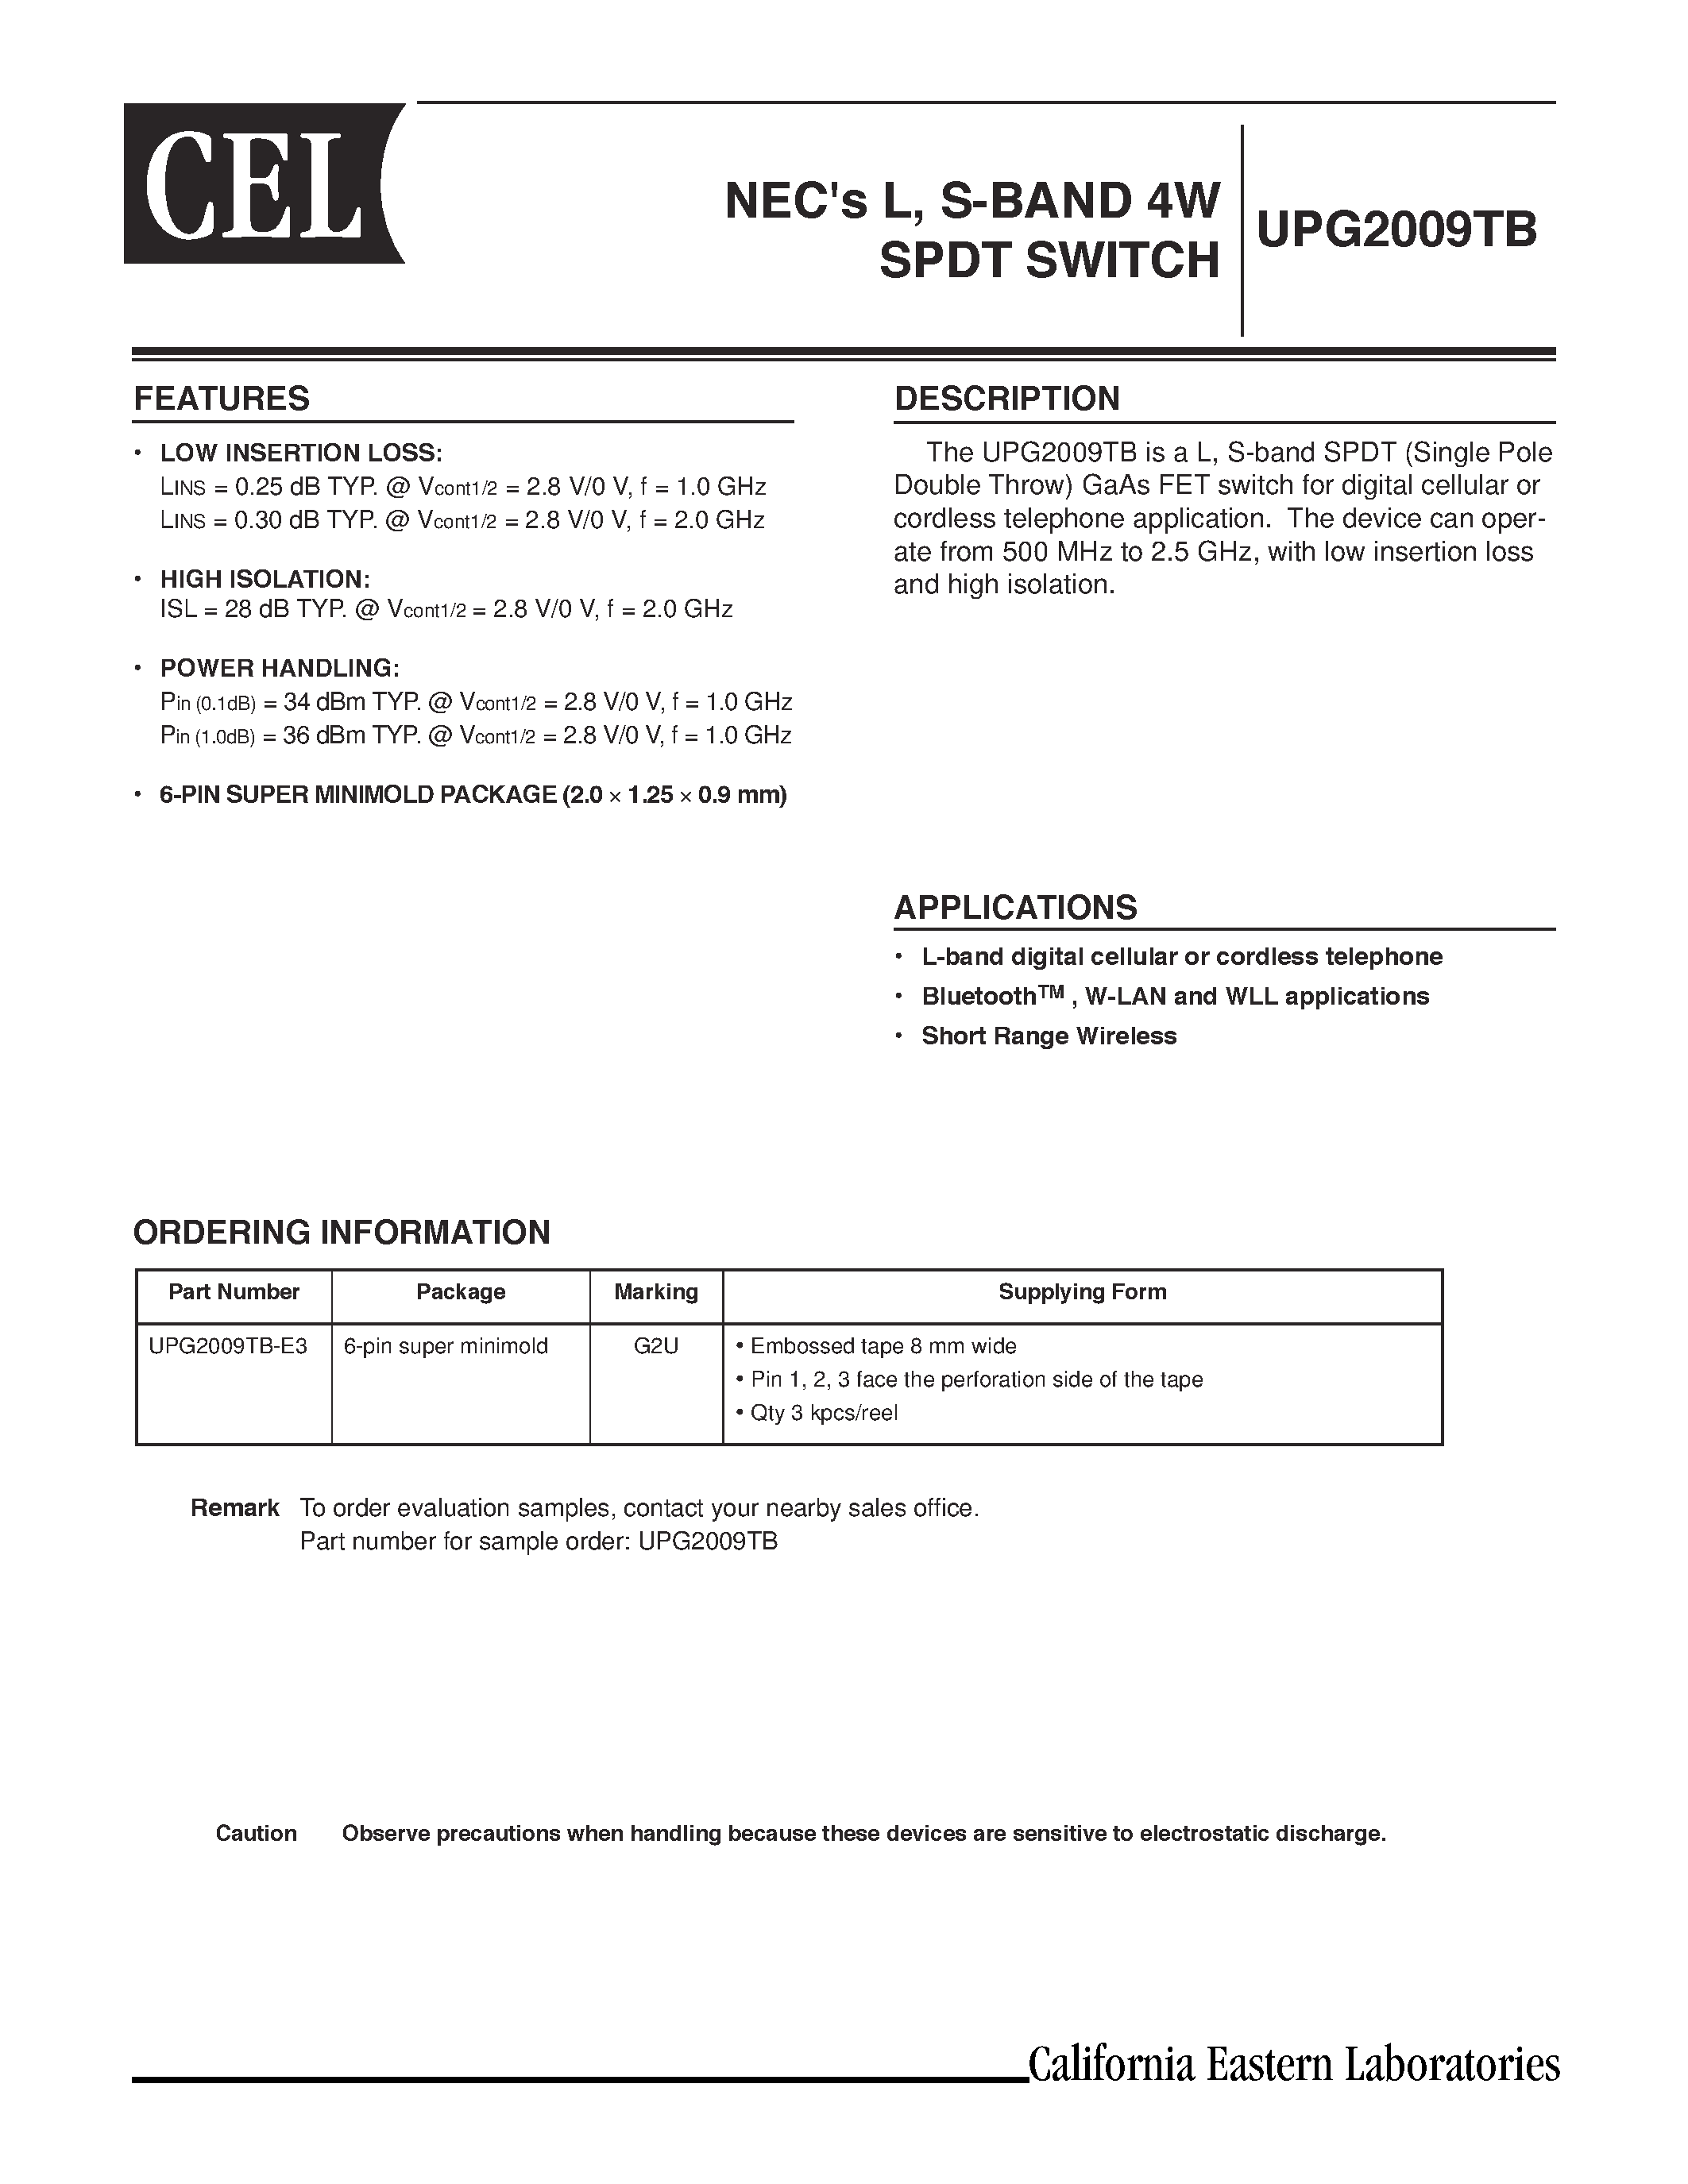 Datasheet UPG2009TB-E3 - NECs L/ S-BAND 4W SPDT SWITCH page 1